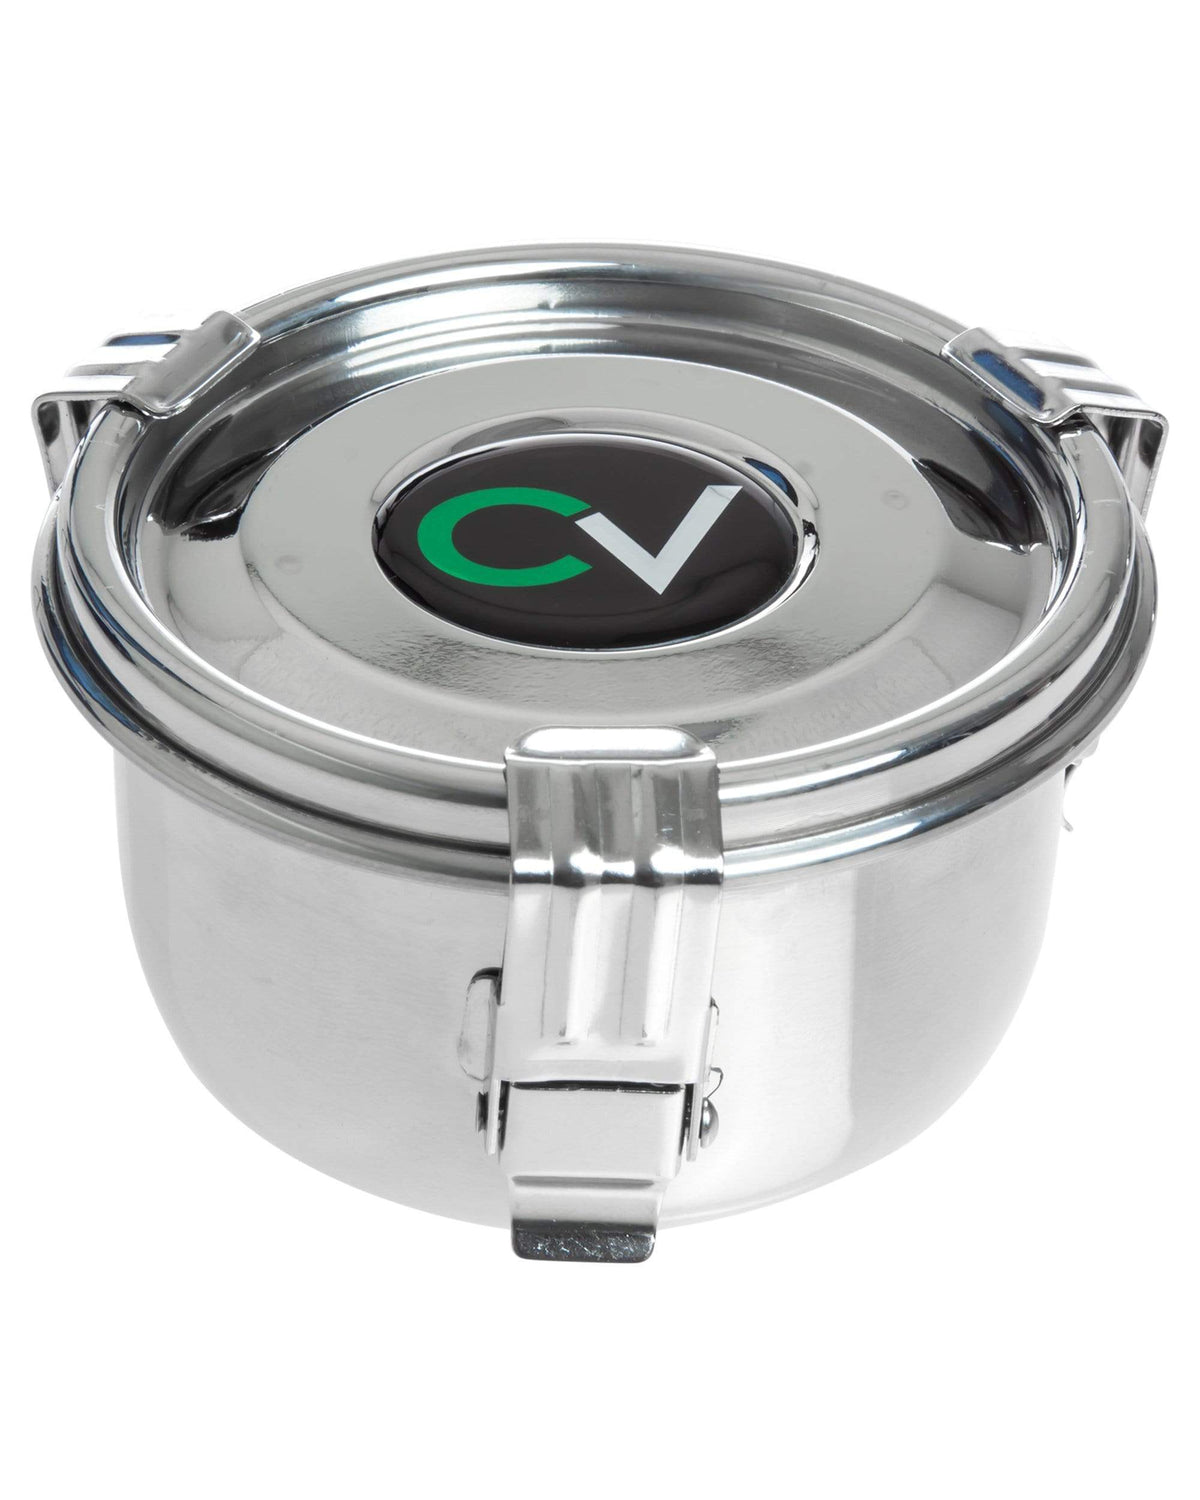 CVault Storage Container CVault